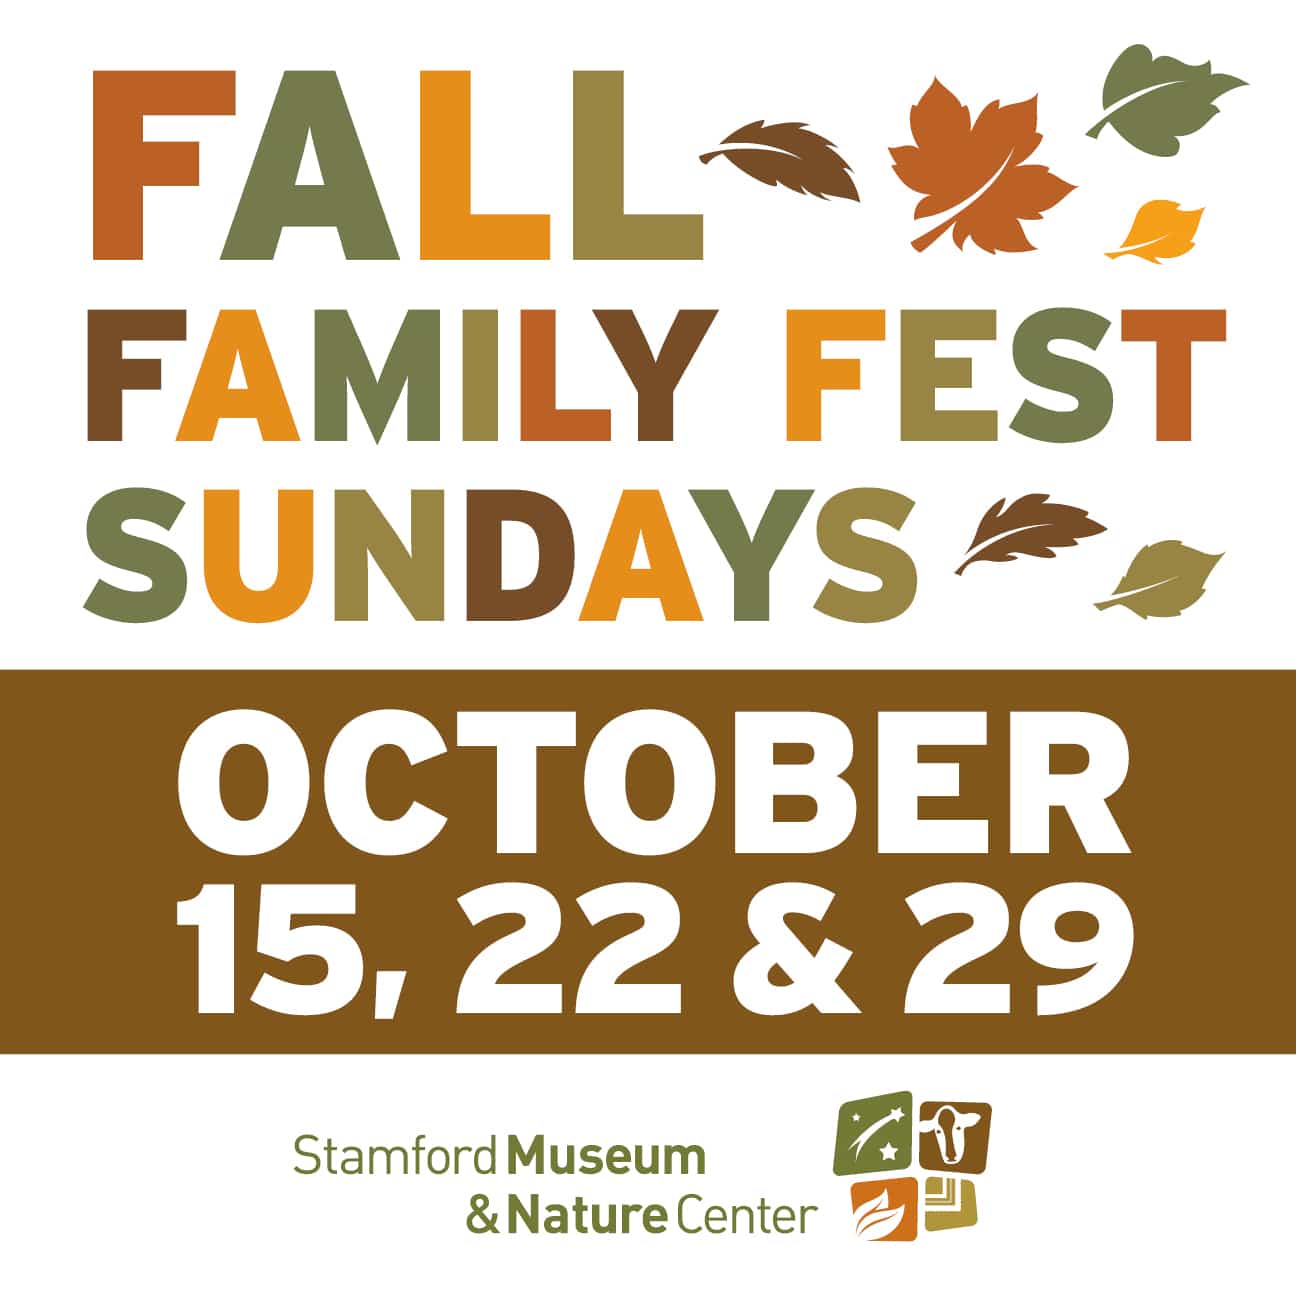 Fall Family Fest Sundays